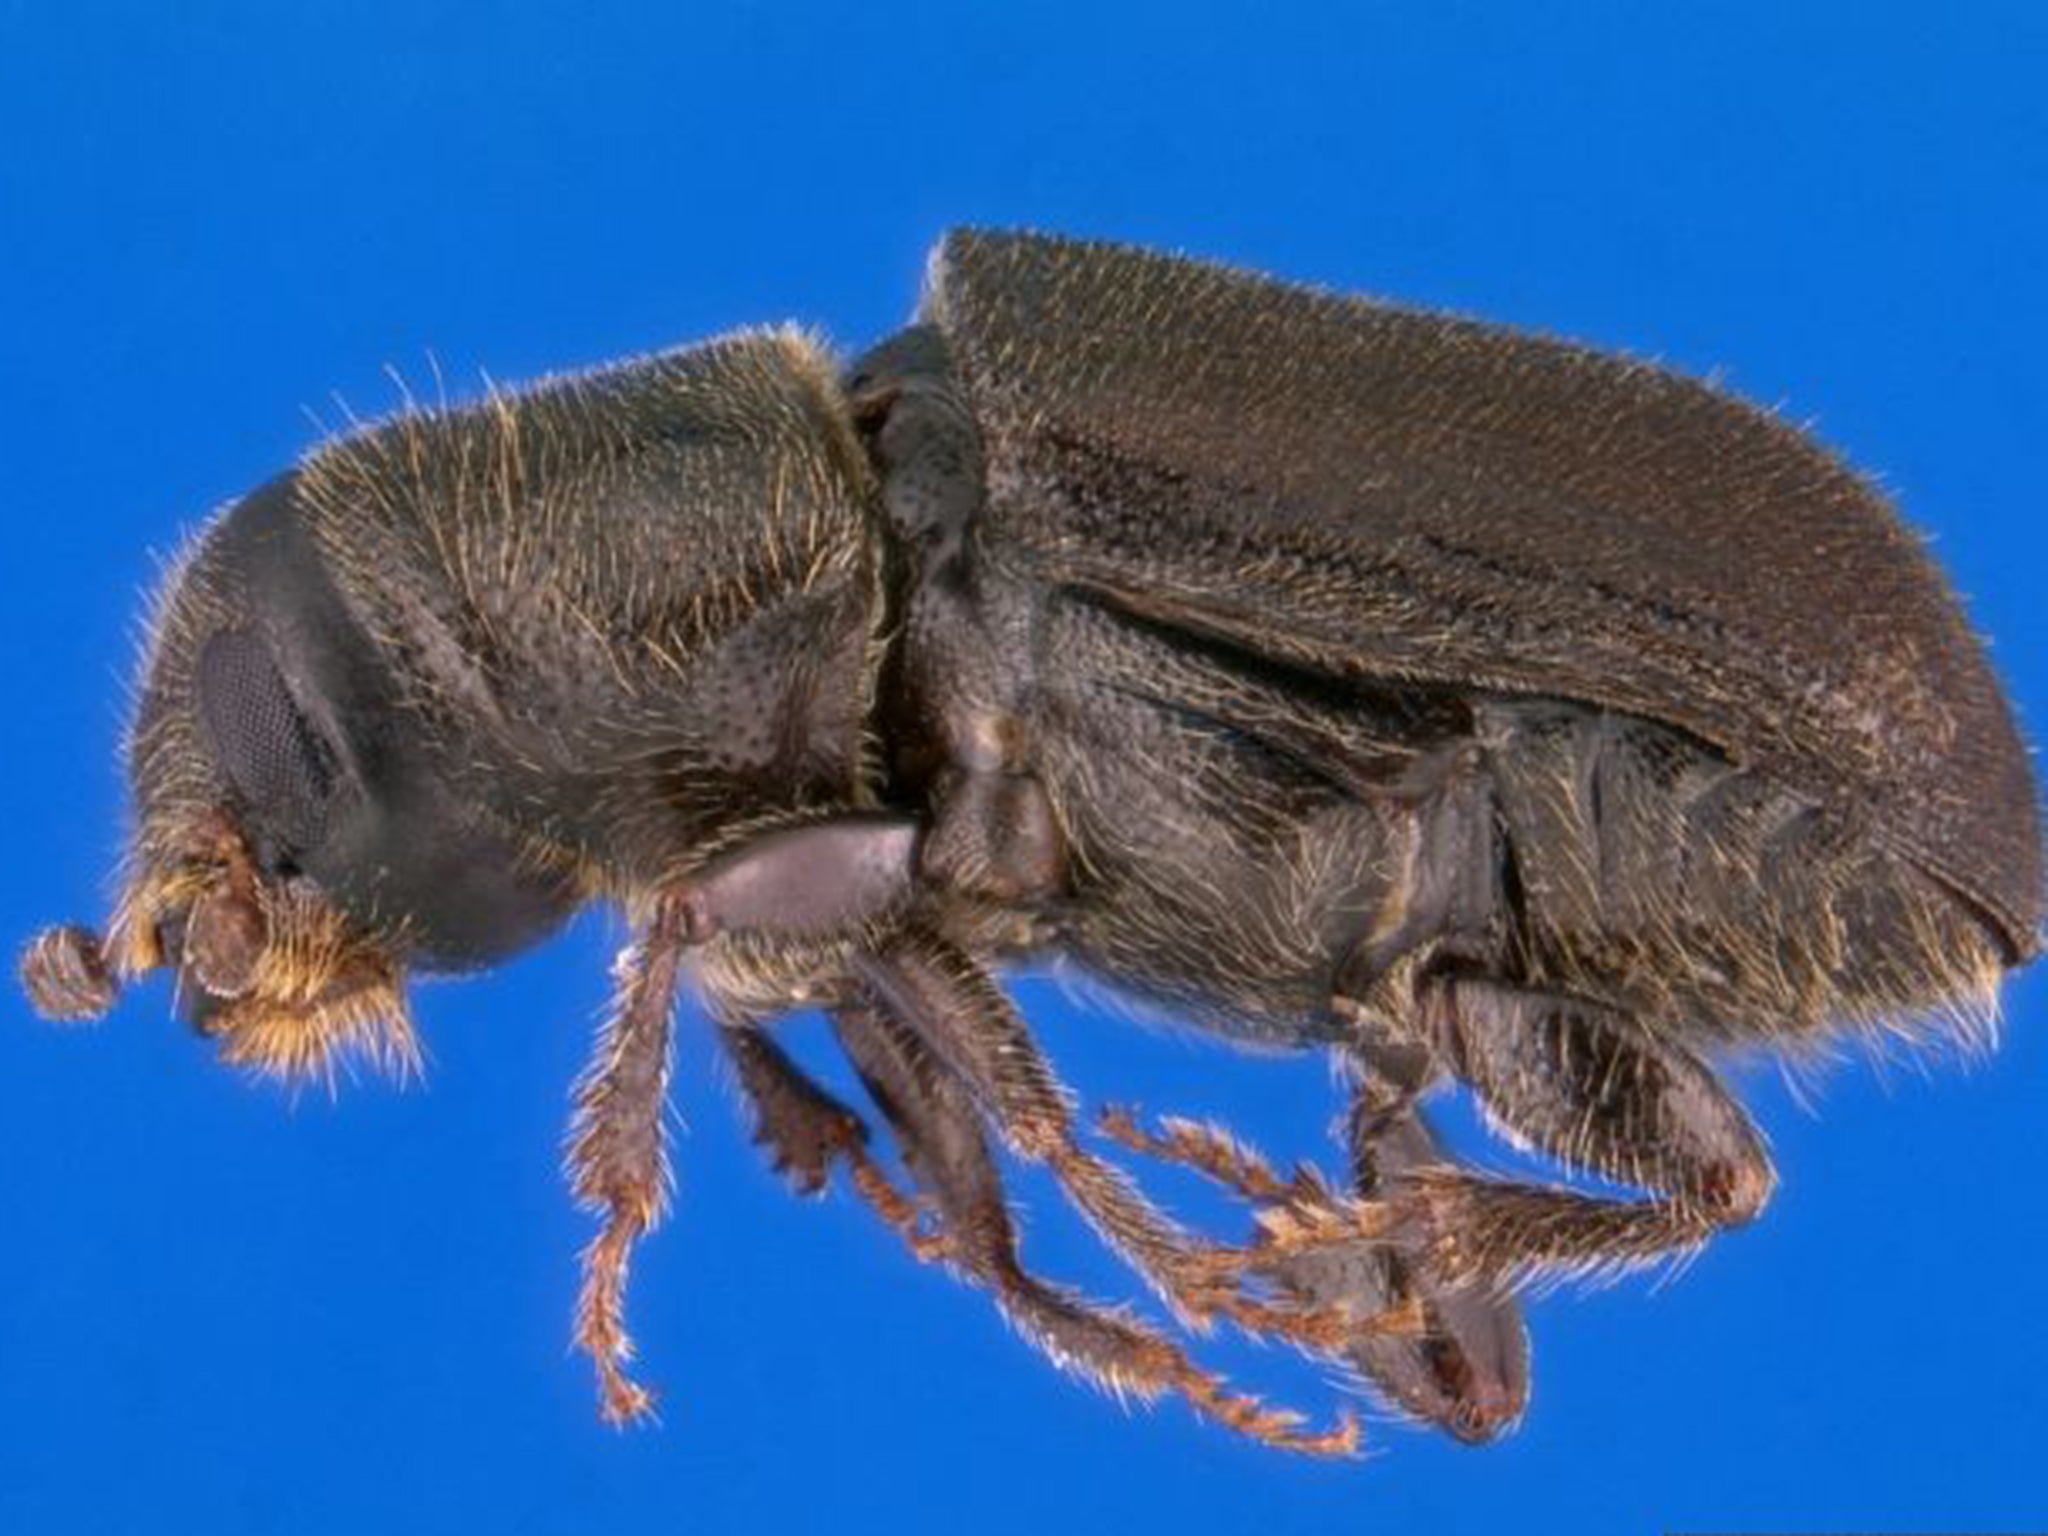 The pine bark beetle